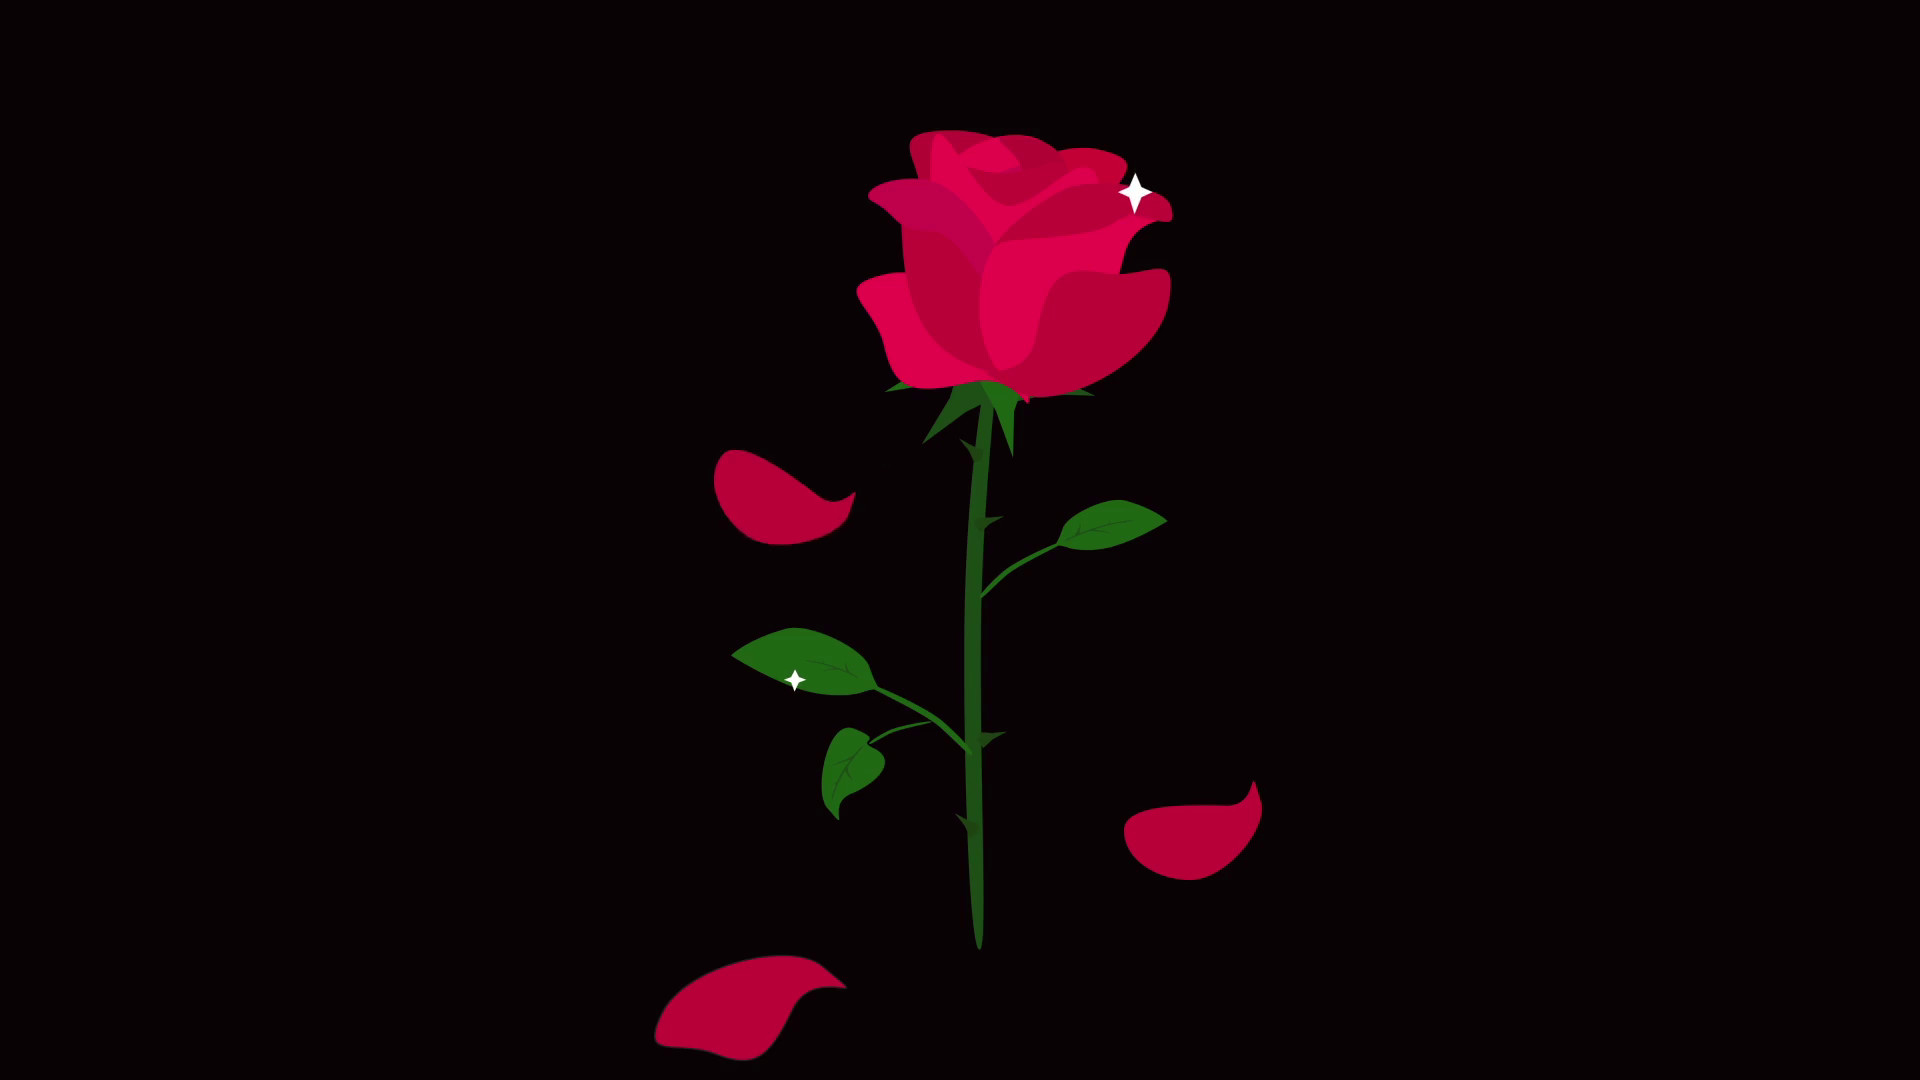 Best Of Red Roses Black Background Hd Wallpaper wallpaper